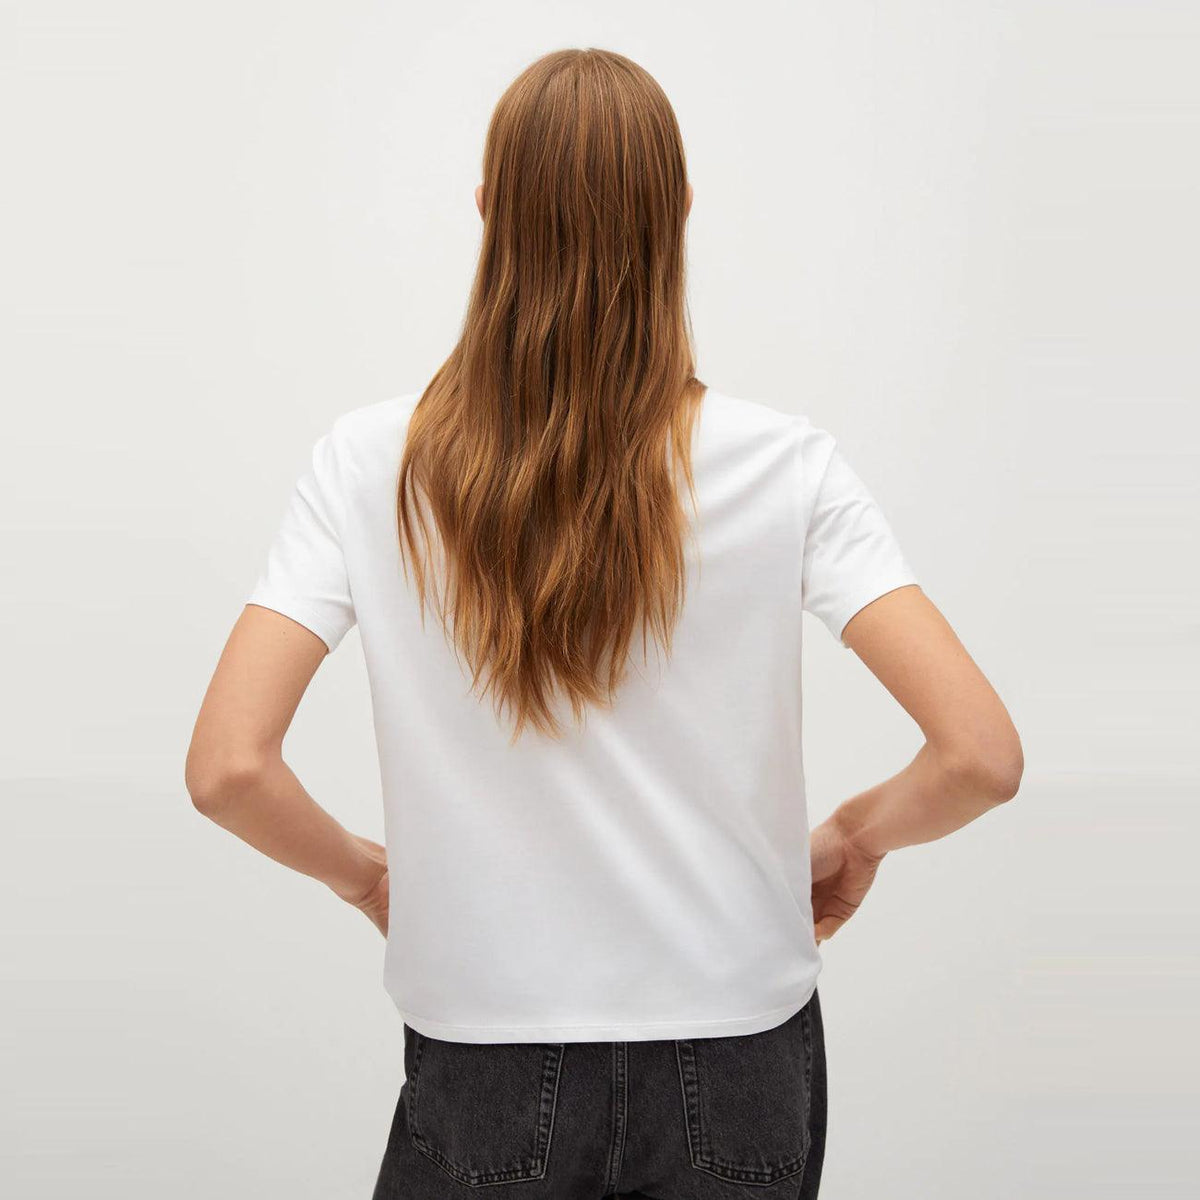 Premium Quality &quot;Tropical&quot; White Cotton Blend T-Shirt For Women (MN-11203) - Brands River